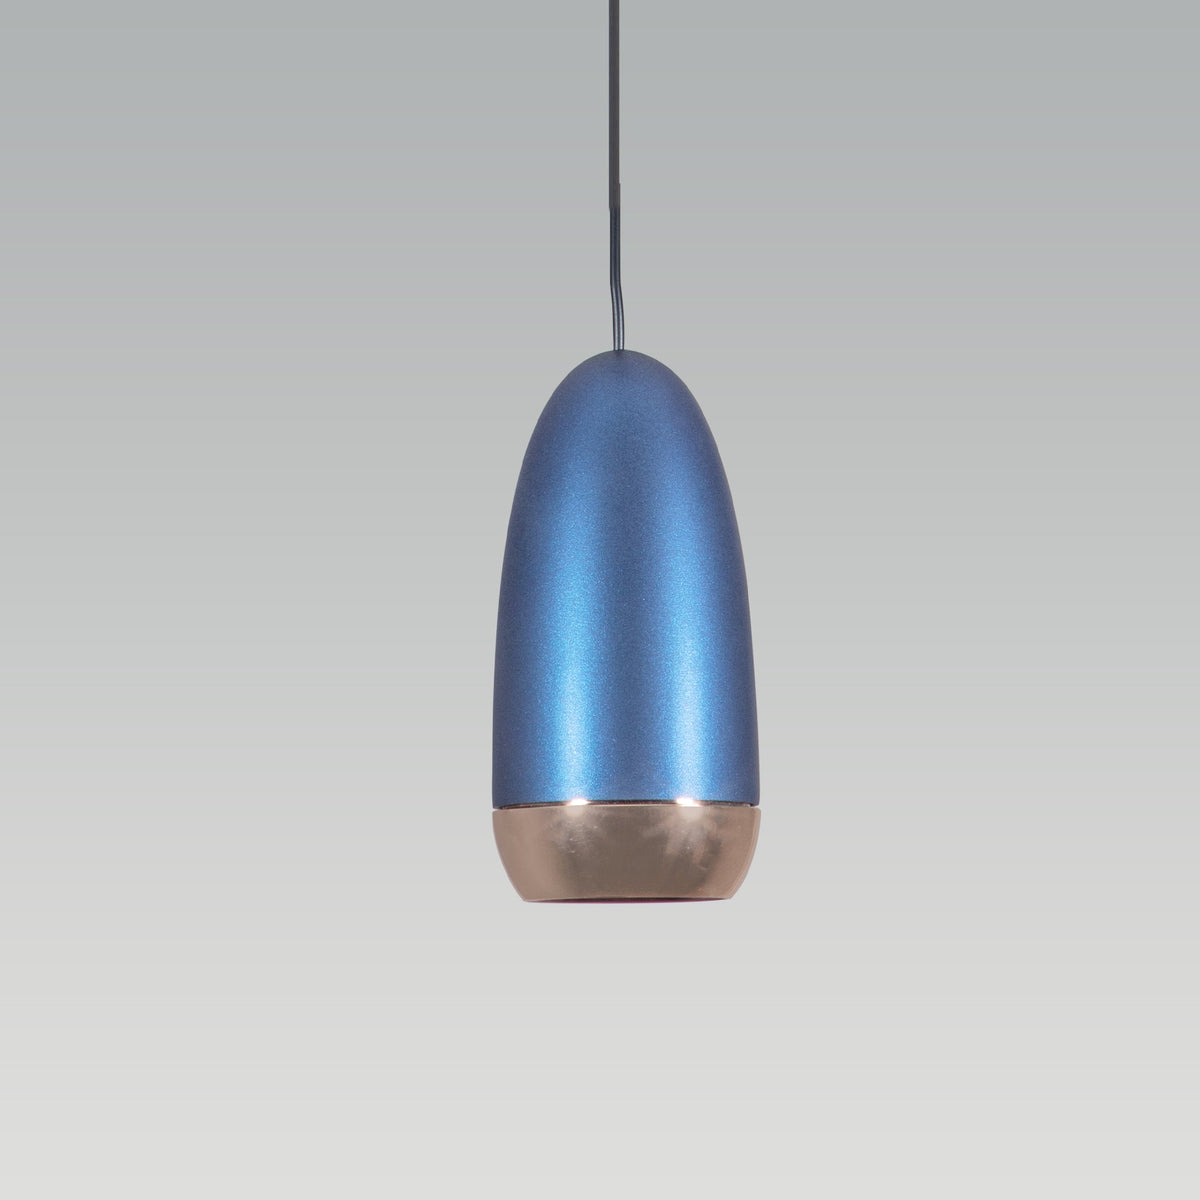 Shop Rome Blue LED Pendant Light online